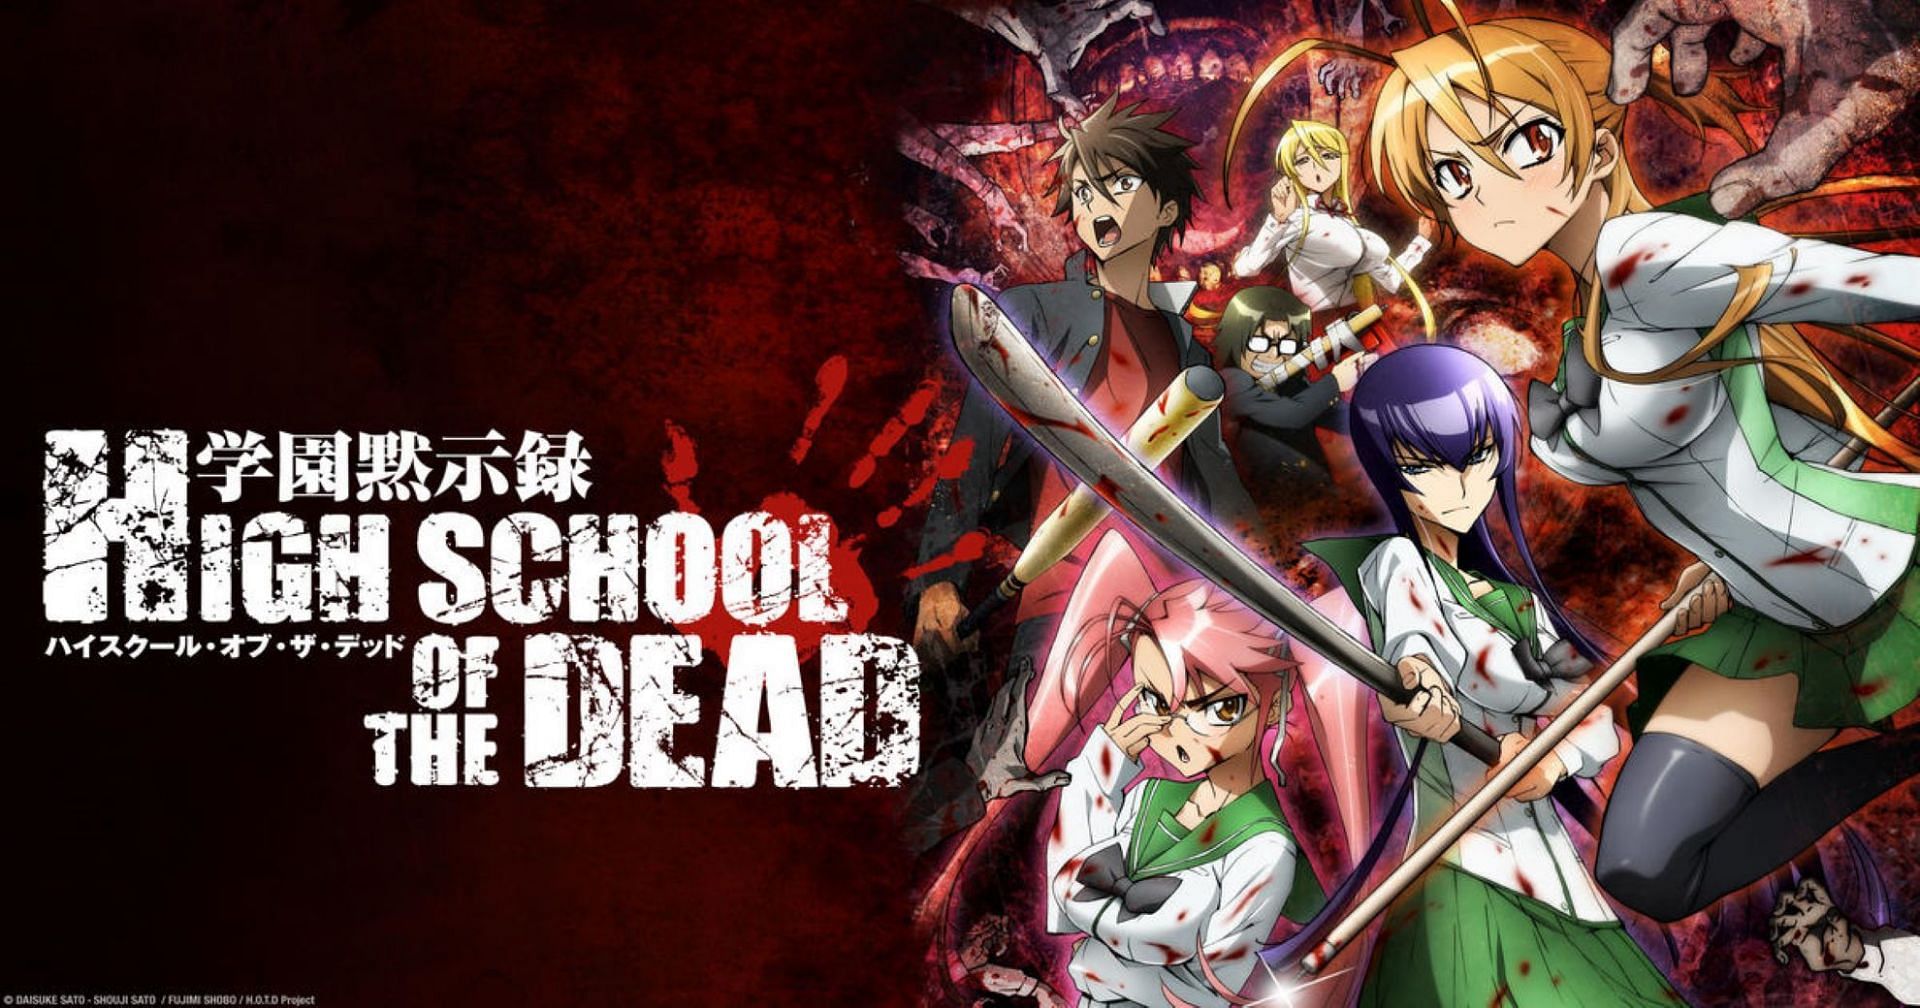 Highschool of the Dead (Image via Studio Madhouse)